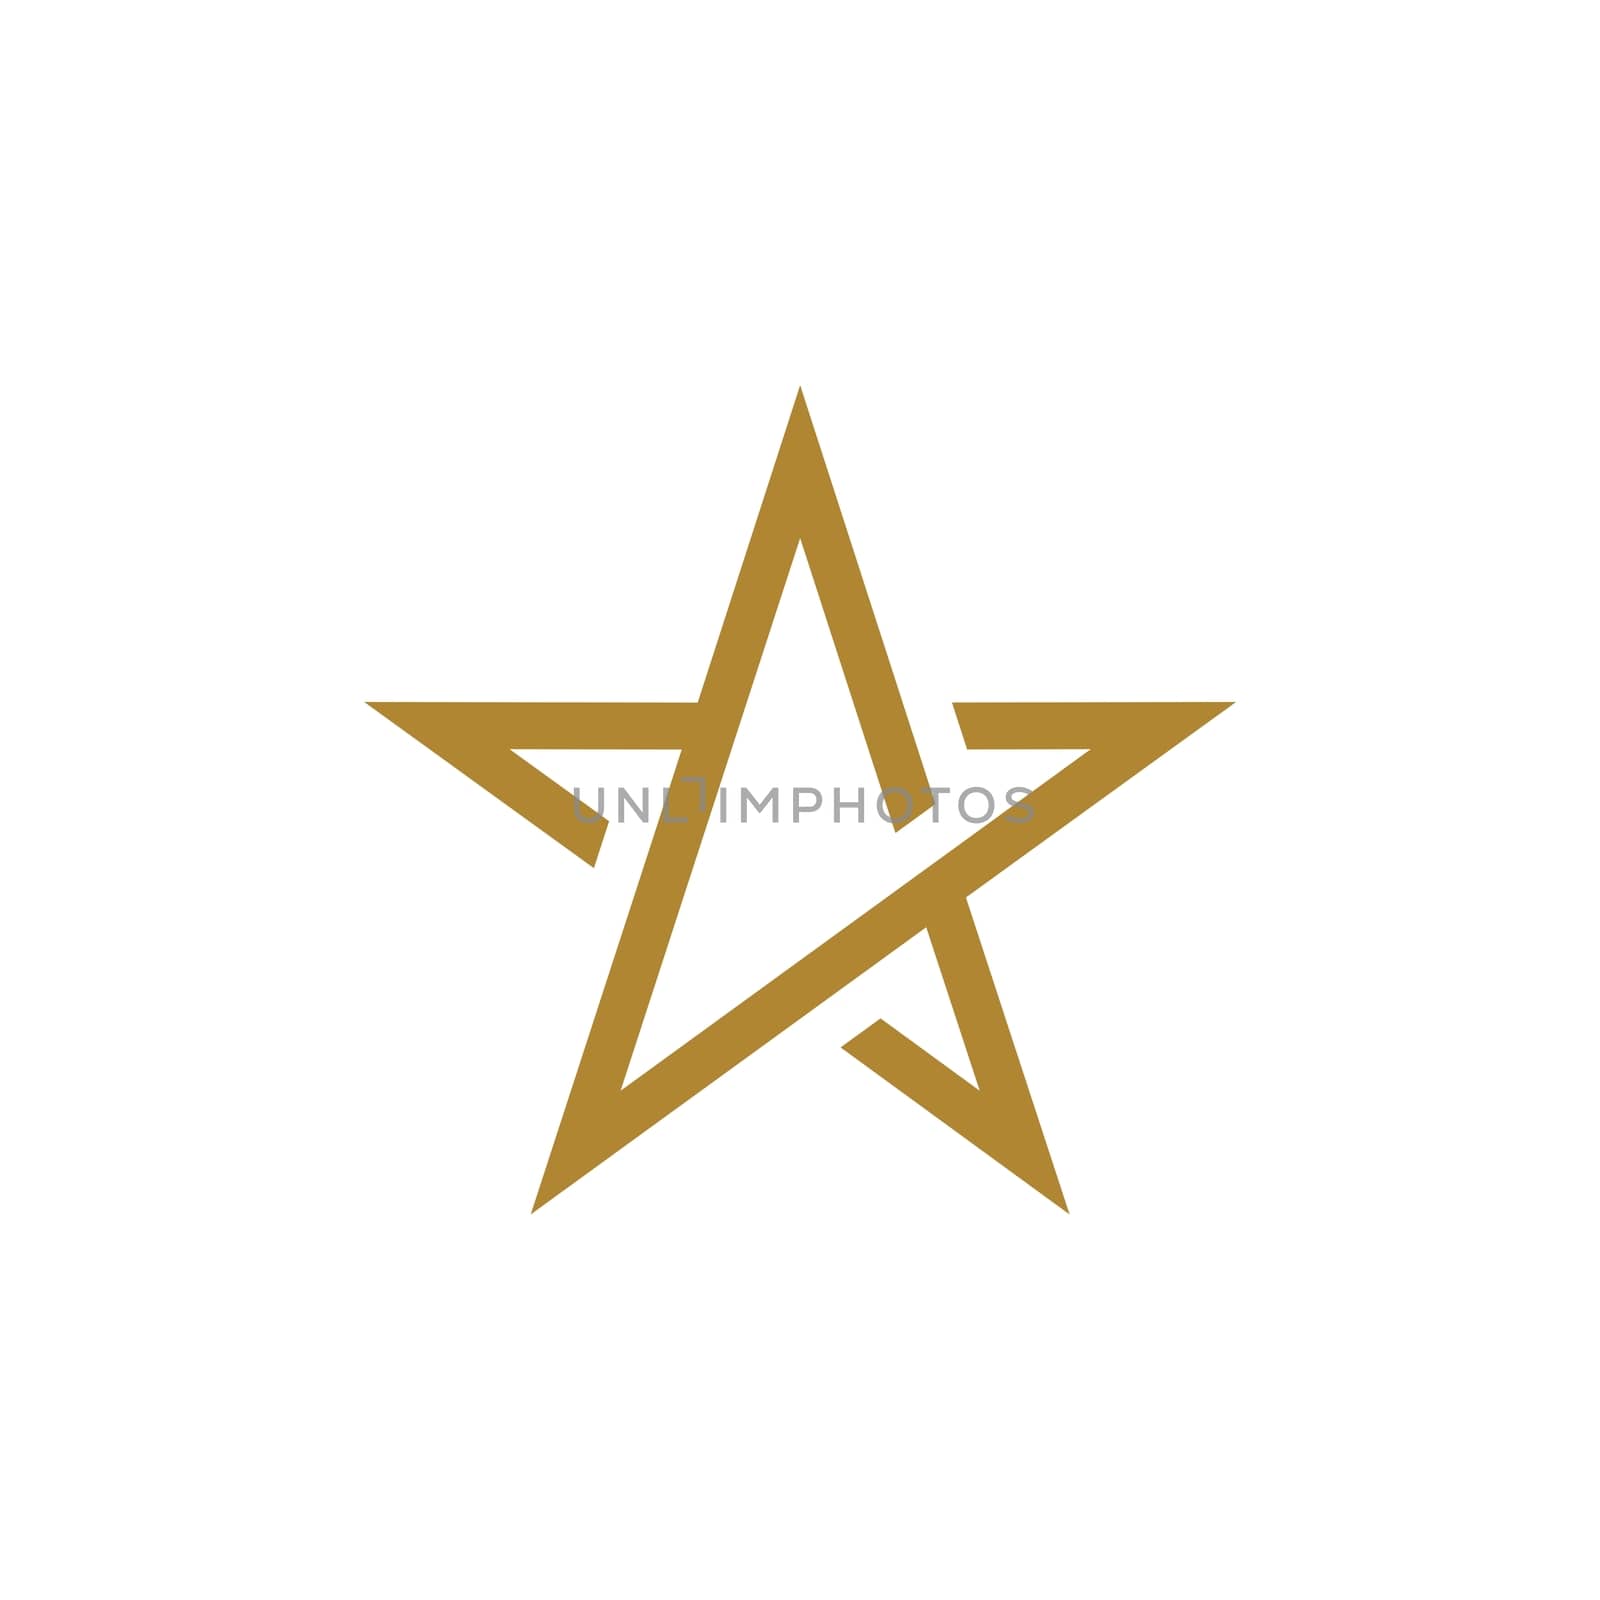 Gold Star Line Logo Template Illustration Design. Vector EPS 10.